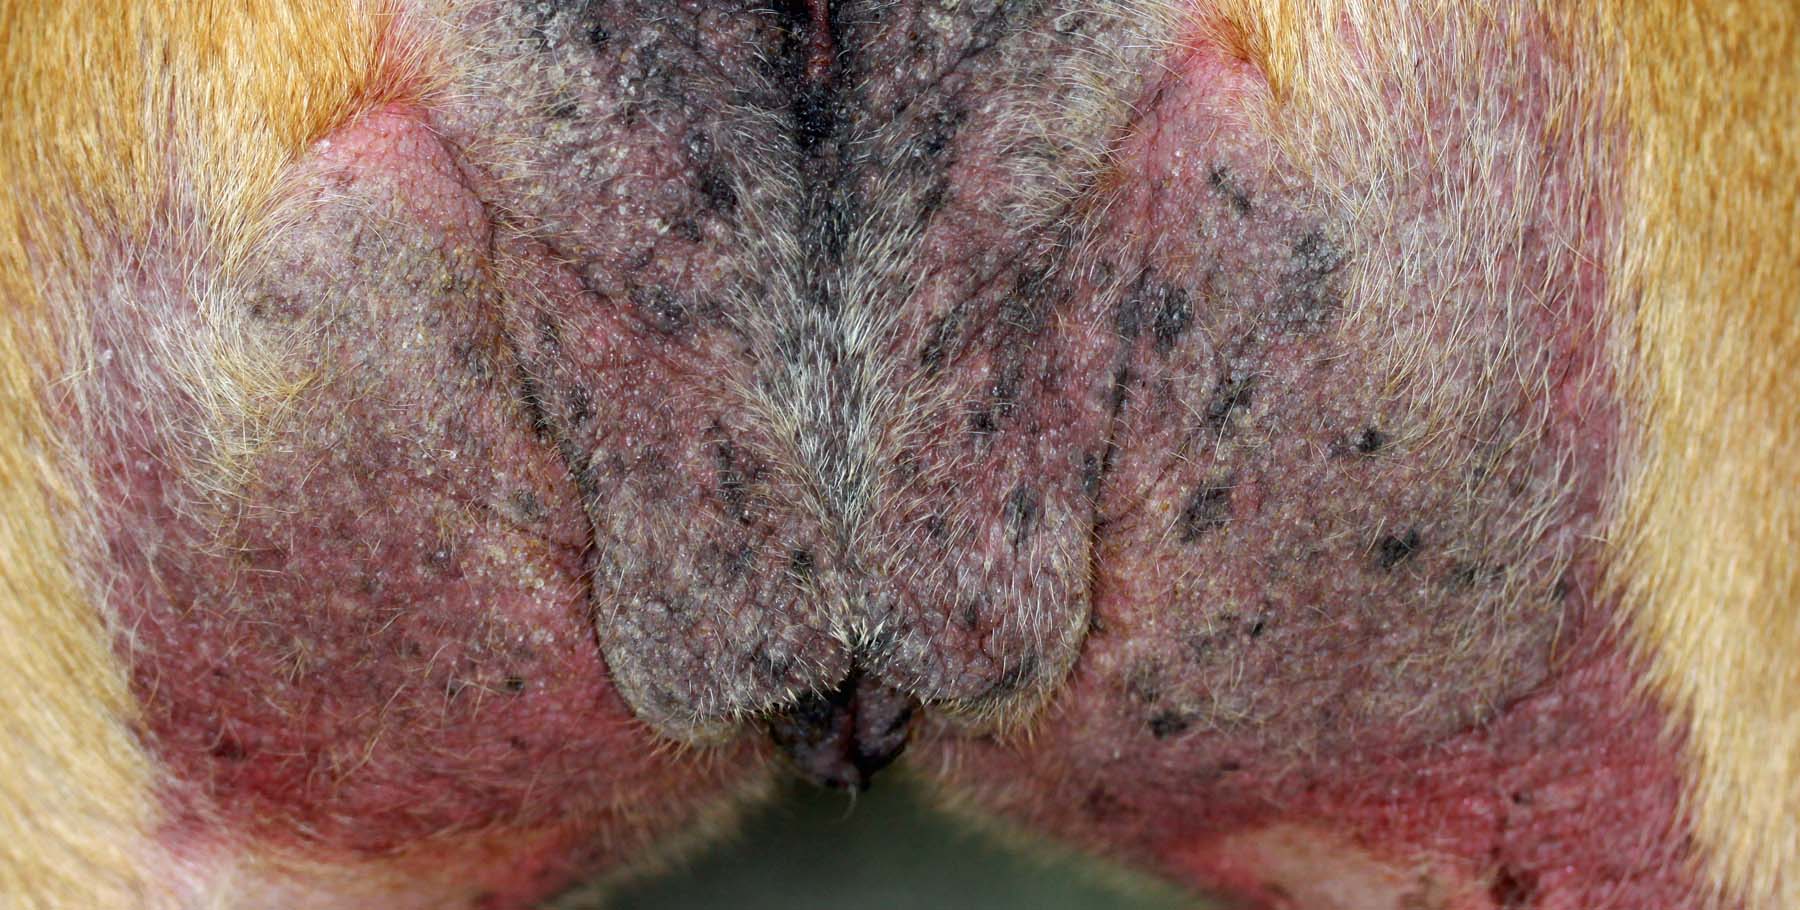 Severe Atopic Dermatitis: Perineum, English Bull Terrier